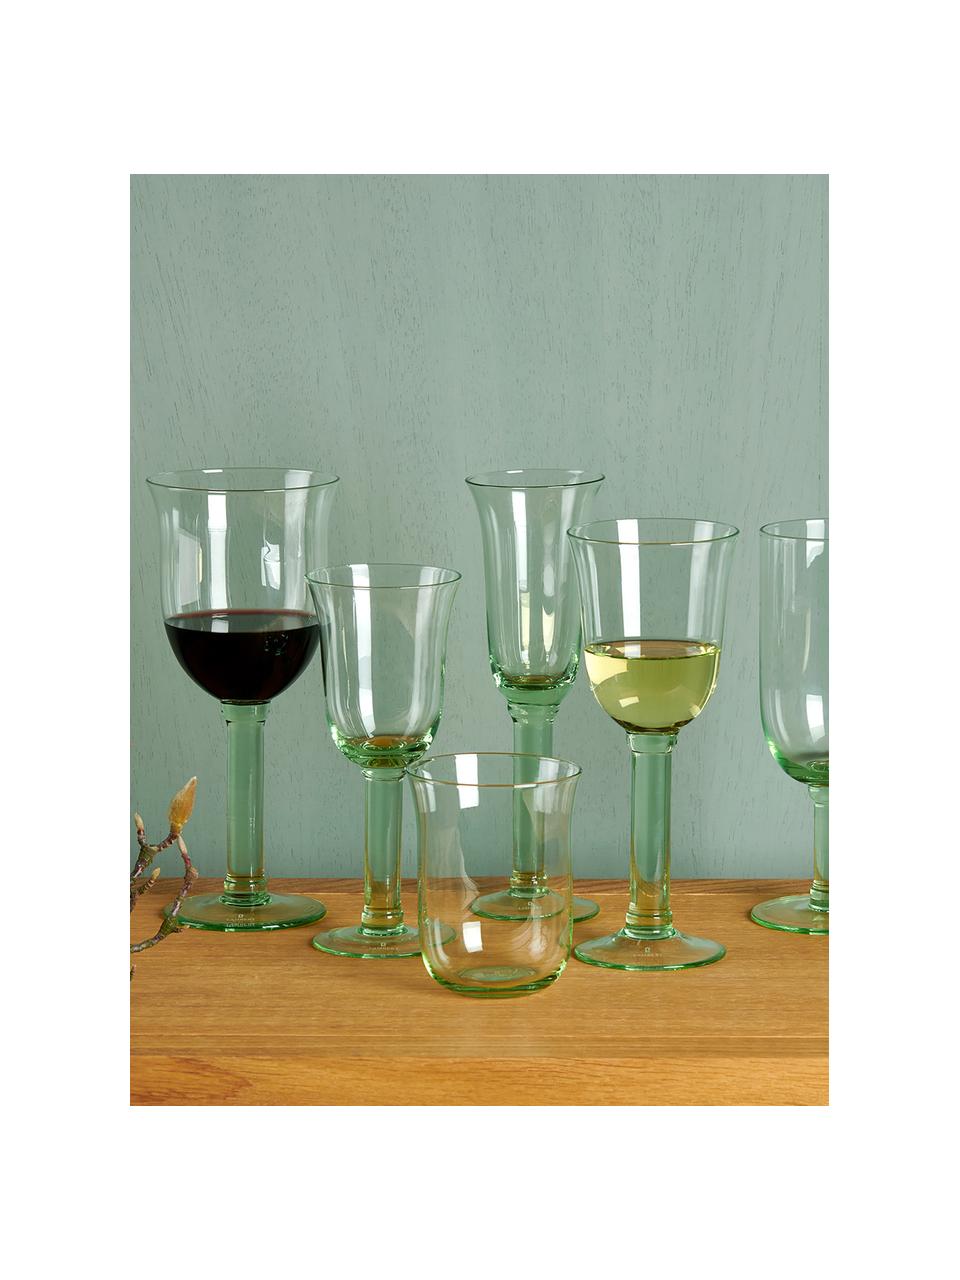 Mondgeblazen witte wijnglazen Corsica, 6 stuks, Glas, Lichtgroen, transparant, Ø 8 x H 19 cm, 350 ml